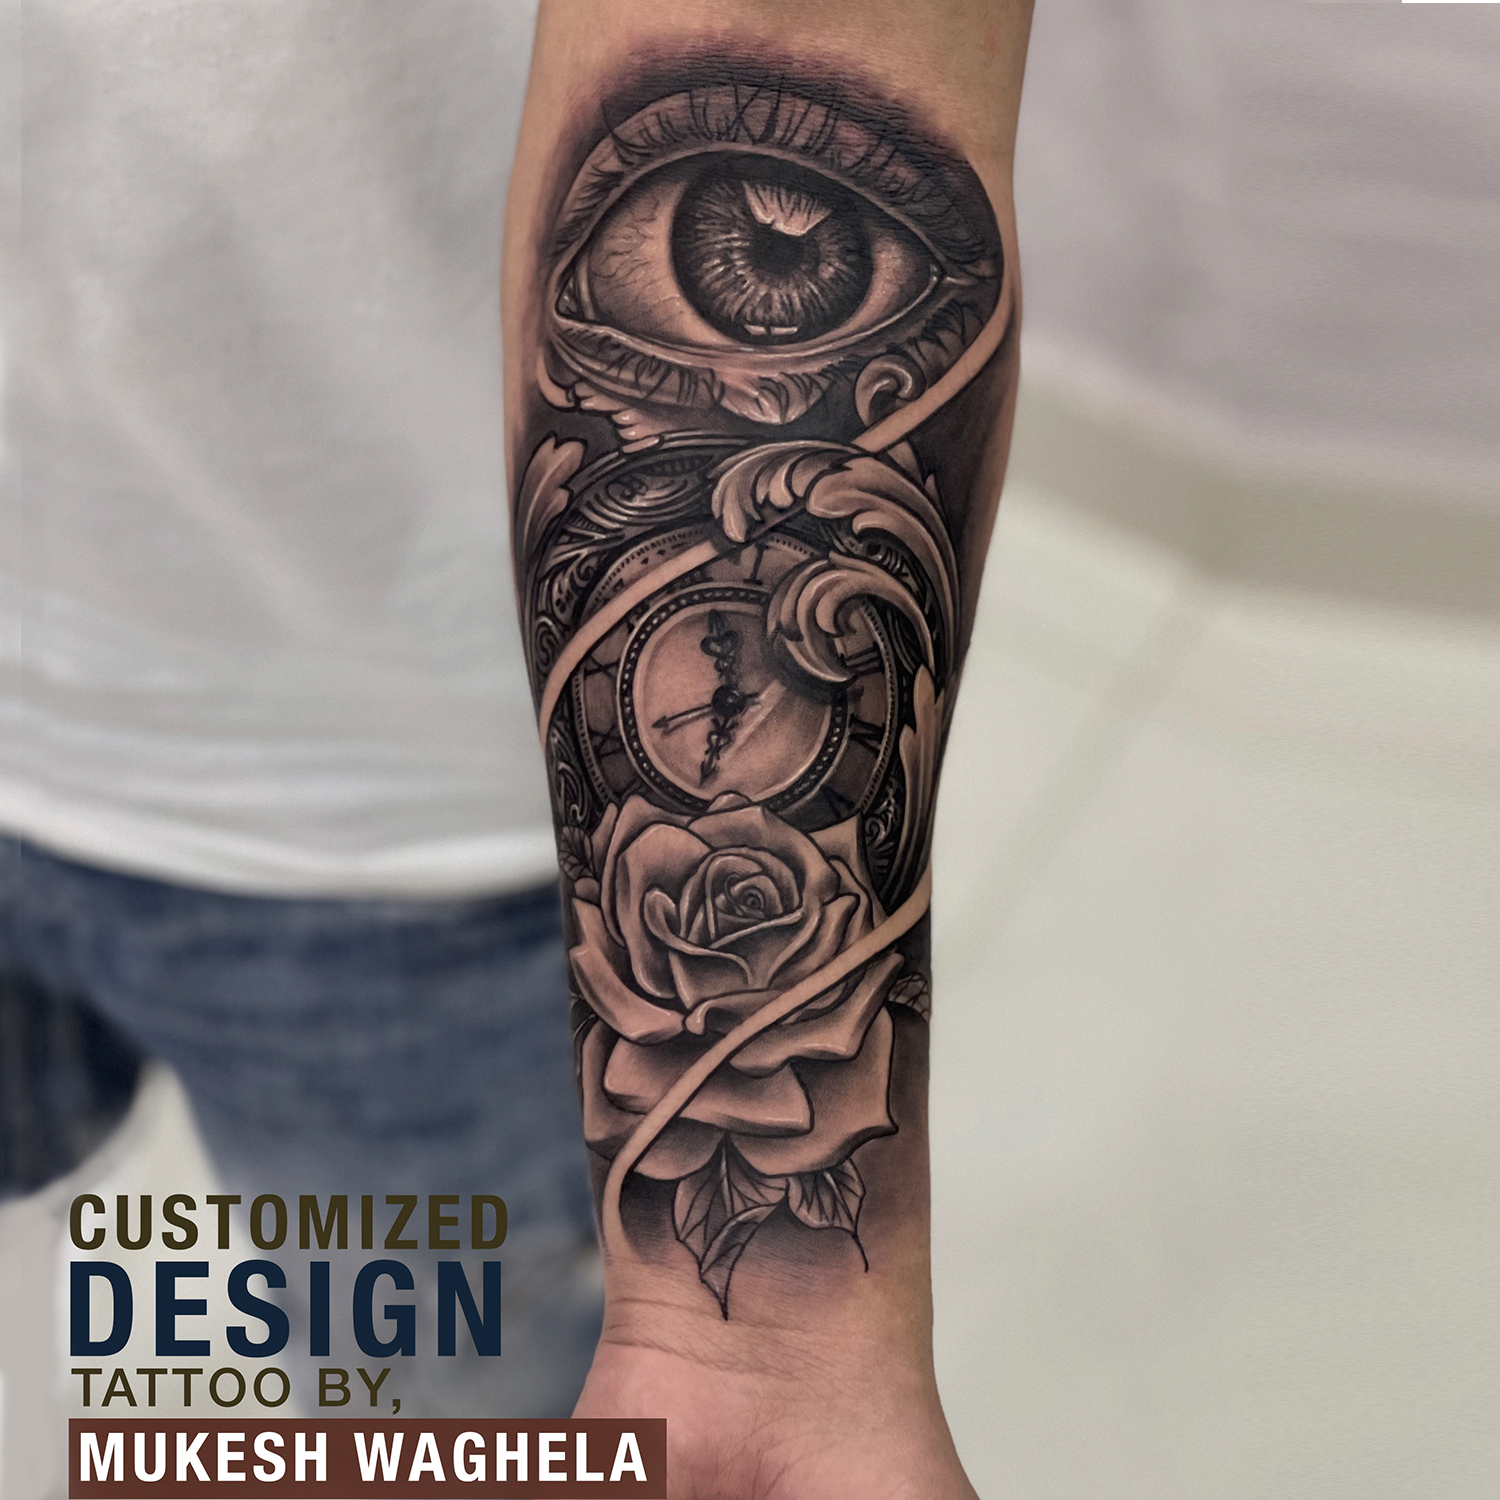 Custom Designed Tattoo By Mukesh Waghela Best Tattoo Artist In Goa at Moksha Tattoo Studio Goa India. - Best Tattoo Studio Goa, Safe, Hygienic - Moksha Tattoo